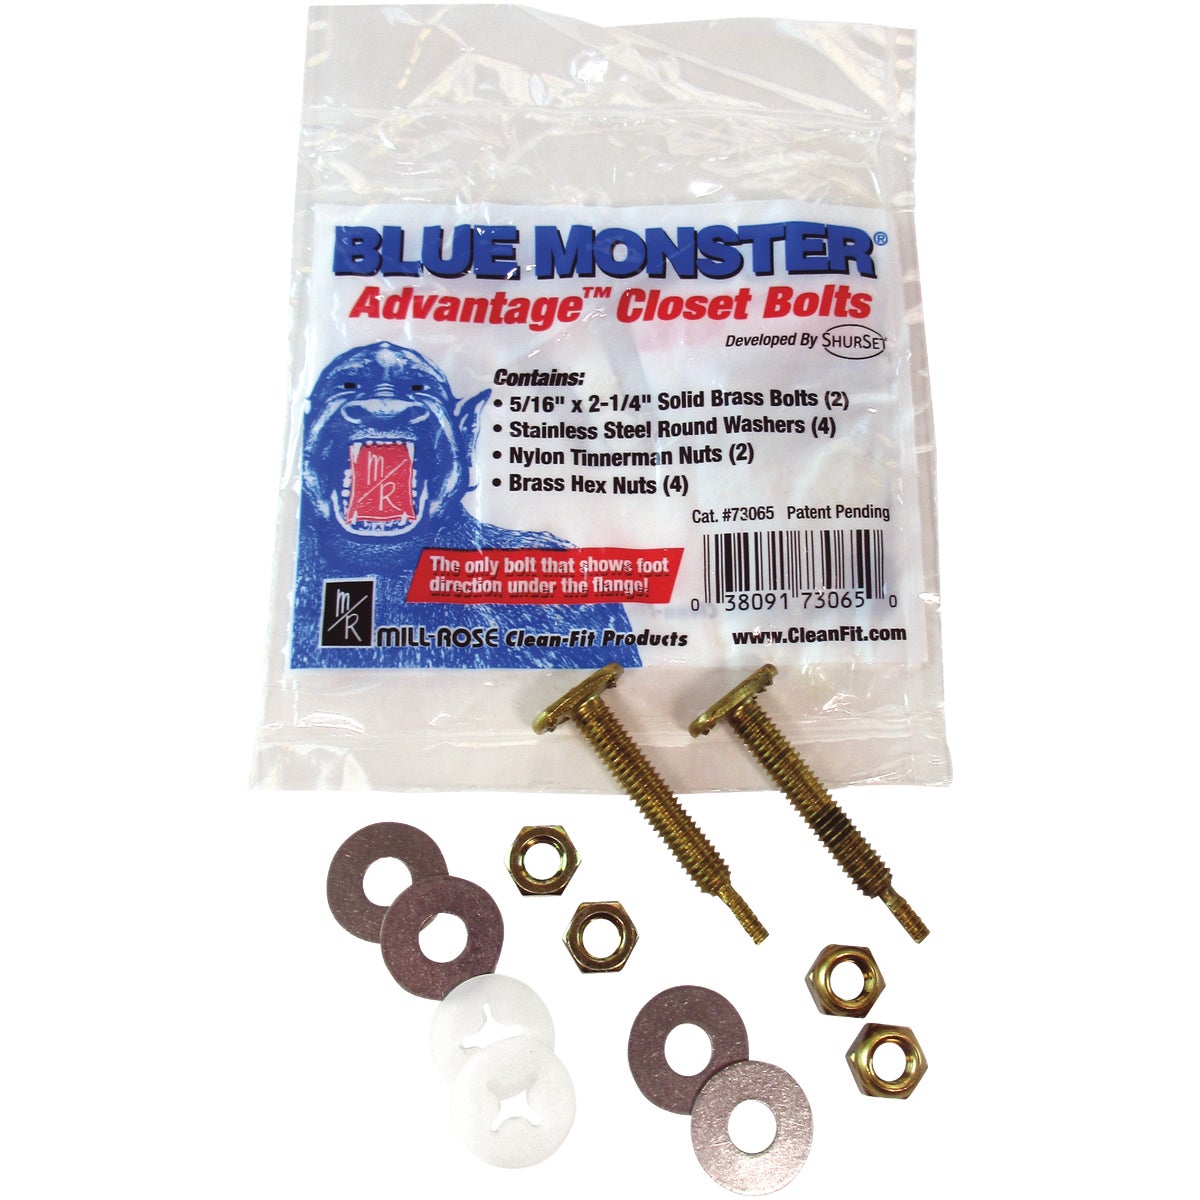 Blue Monster 5/16 In. x 2-1/4 In. Advantage Closet Bolt Kit